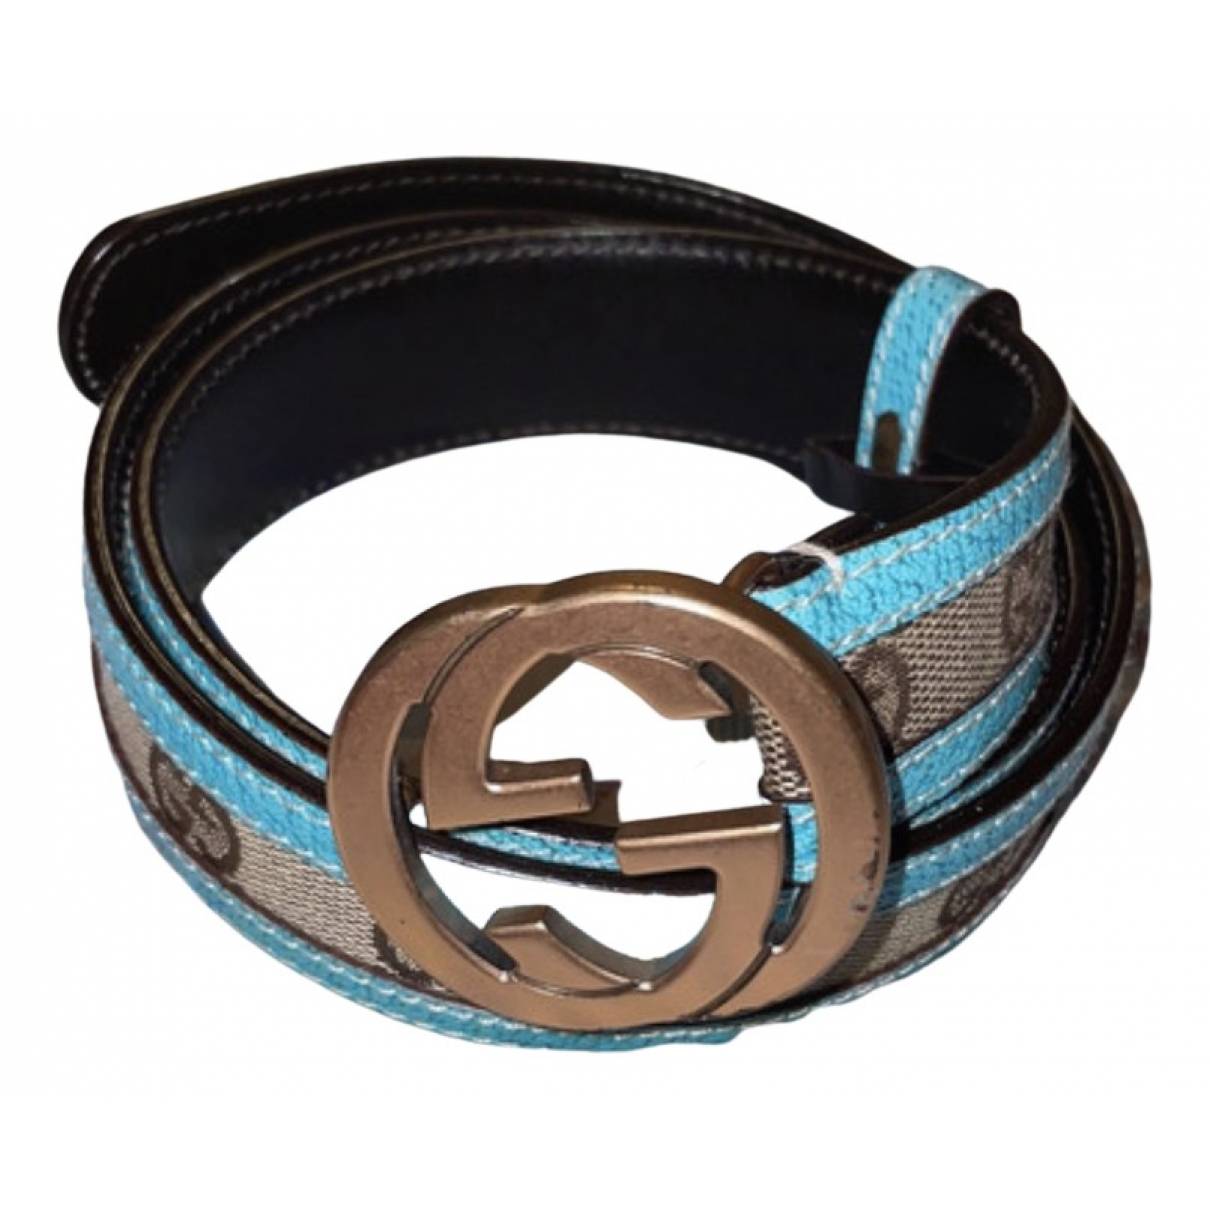 GG Buckle cloth belt Gucci - Vintage